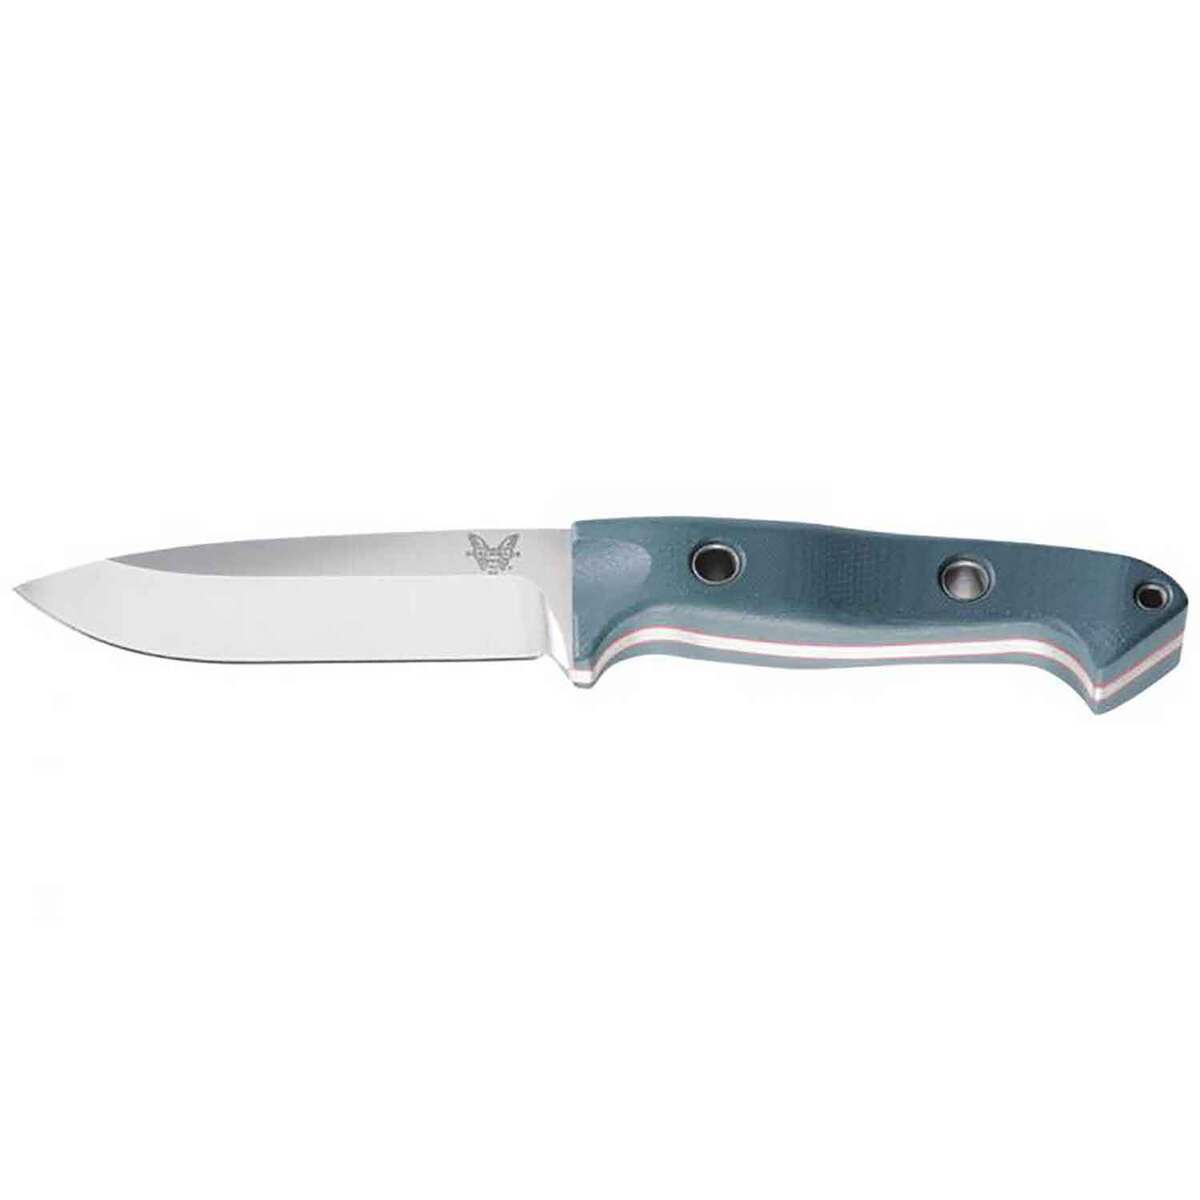 https://www.sportsmans.com/medias/benchmade-bushcrafter-44-inch-fixed-blade-knife-1361565-1.jpg?context=bWFzdGVyfGltYWdlc3wyMTU3MnxpbWFnZS9qcGVnfGhmZi9oNTcvMTA3ODk4OTcwNDM5OTgvMTM2MTU2NS0xX2Jhc2UtY29udmVyc2lvbkZvcm1hdF8xMjAwLWNvbnZlcnNpb25Gb3JtYXR8Y2ZkN2Y0M2YwMjUwZjQ4MDU1ZDlkYTUwMTE5OWZlMDhjNWI2NjM1NzViMjExYTMyYjFlMzlhYTQxNmFjY2EzMQ